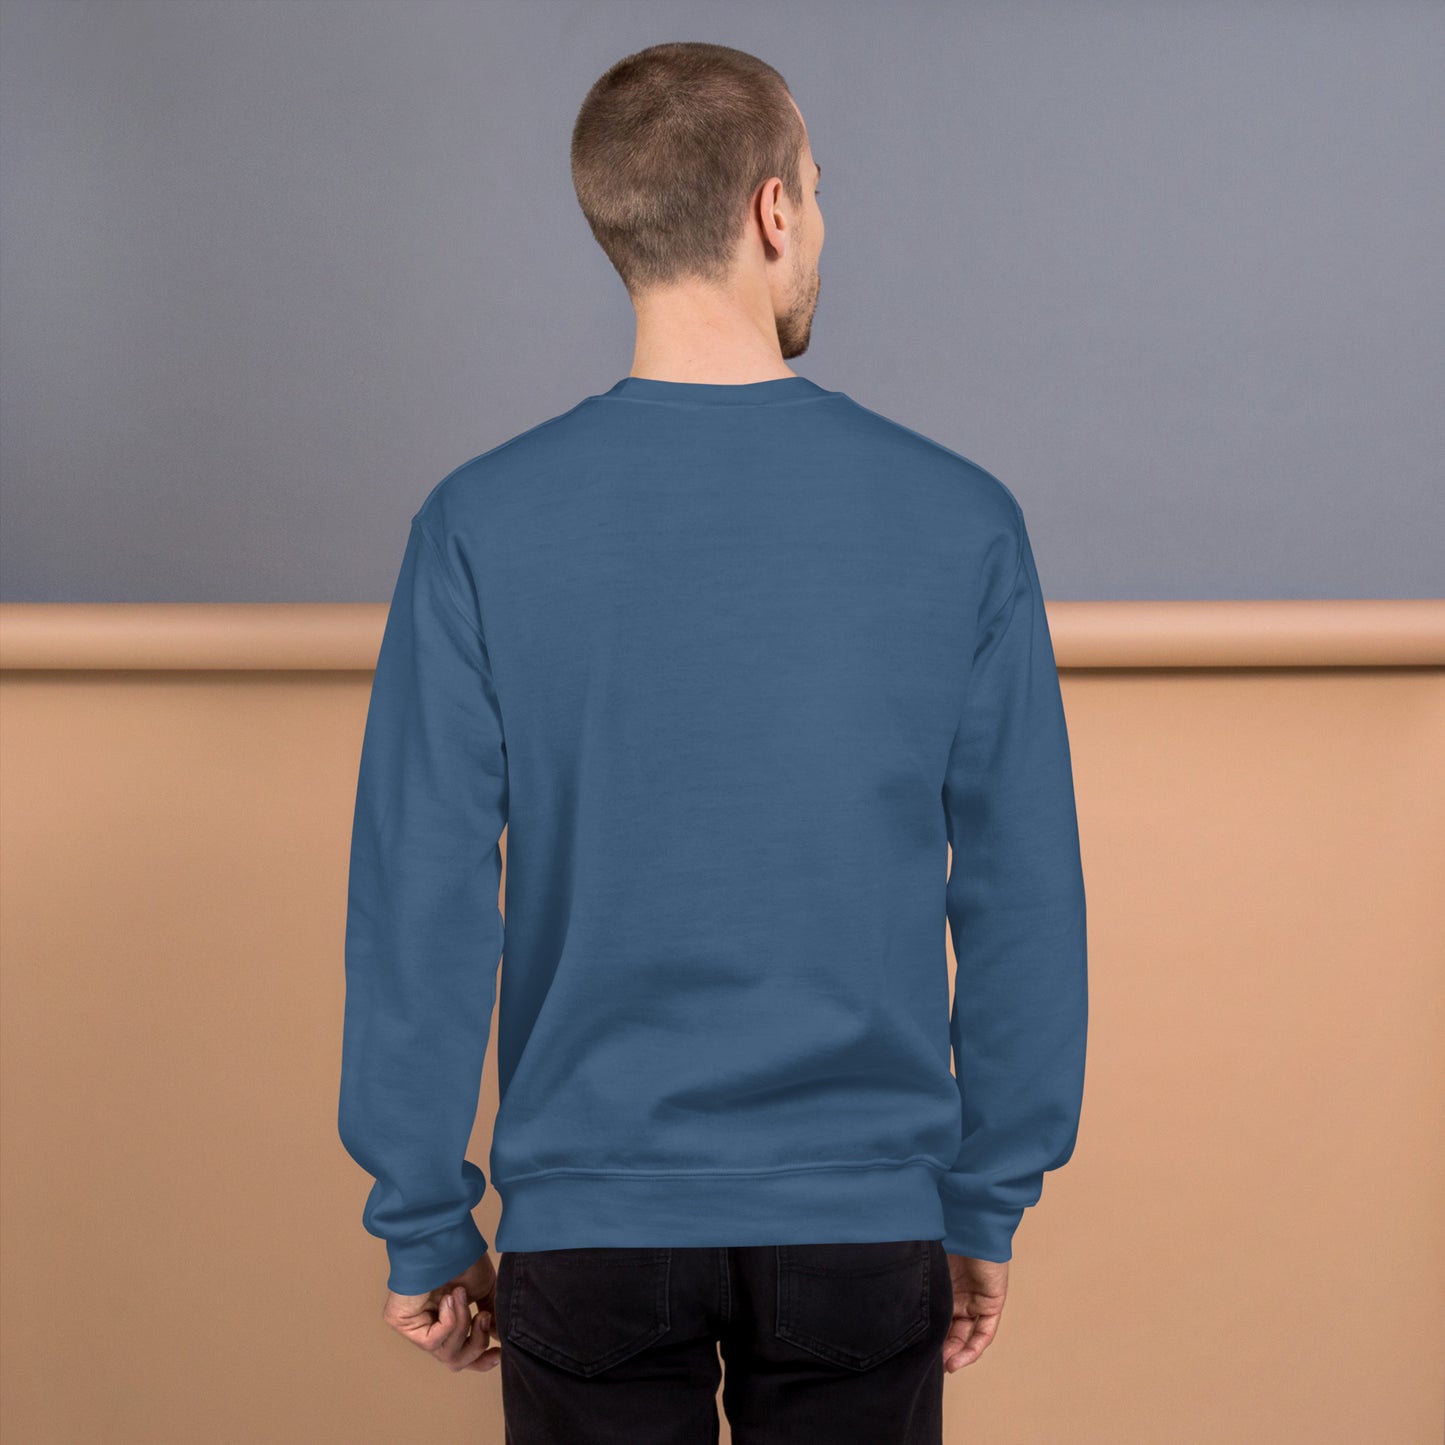 Keshker Unisex Sweatshirt for man